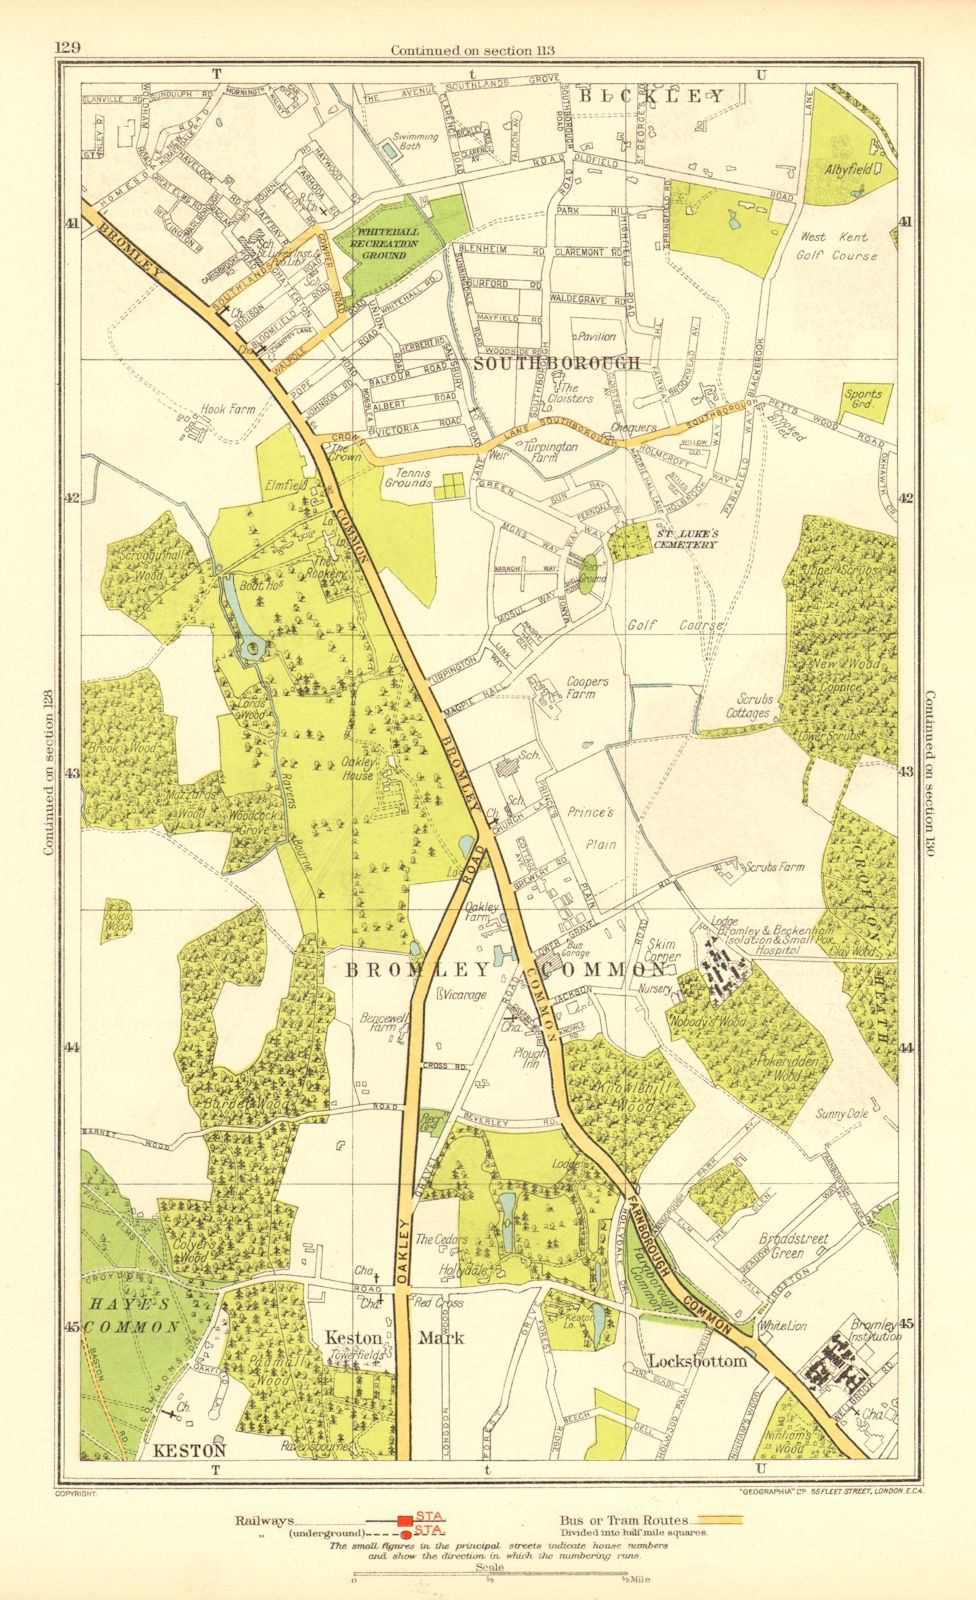 Associate Product BROMLEY COMMON. Keston Keston Mark Locksbottom Southborough Bromley 1937 map